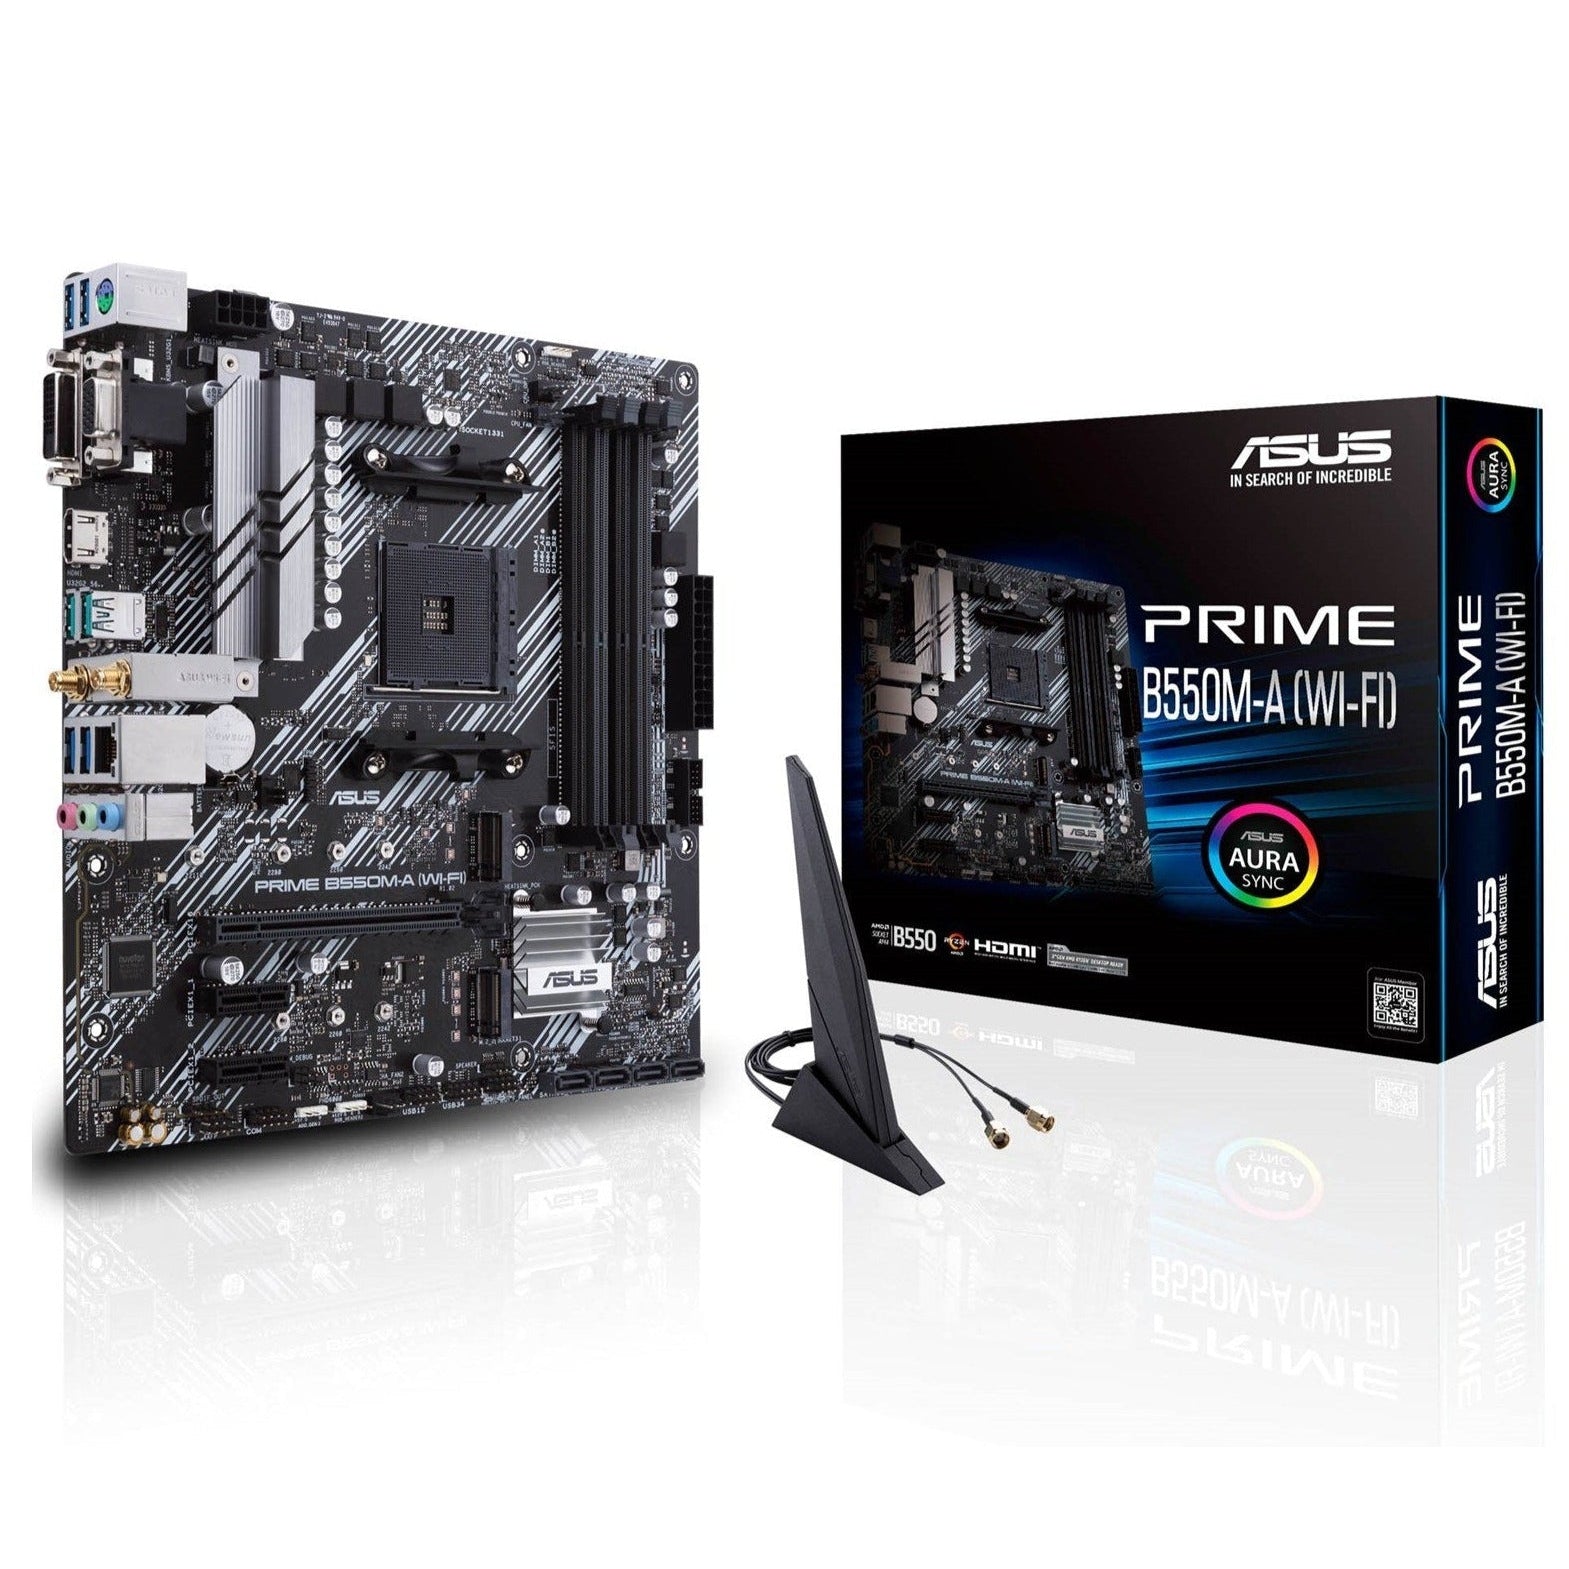 Asus PRIME B550M-A (WI-FI) AMD B550 AM4 Micro ATX 4 Motherboard